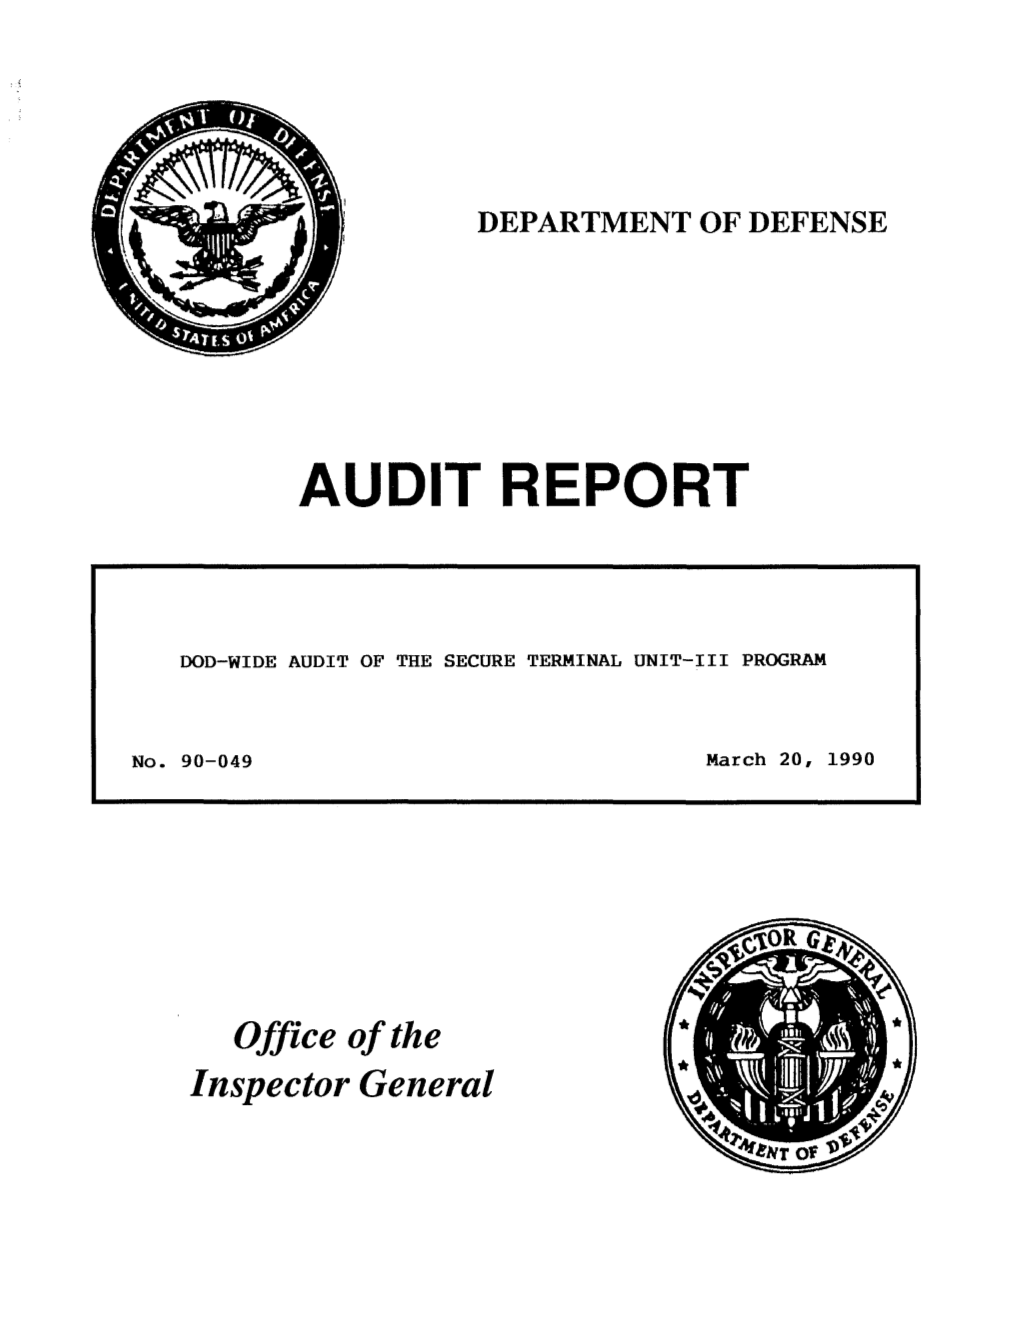 Dod-Wide Audit of the Secure Terminal, Unit-III Program